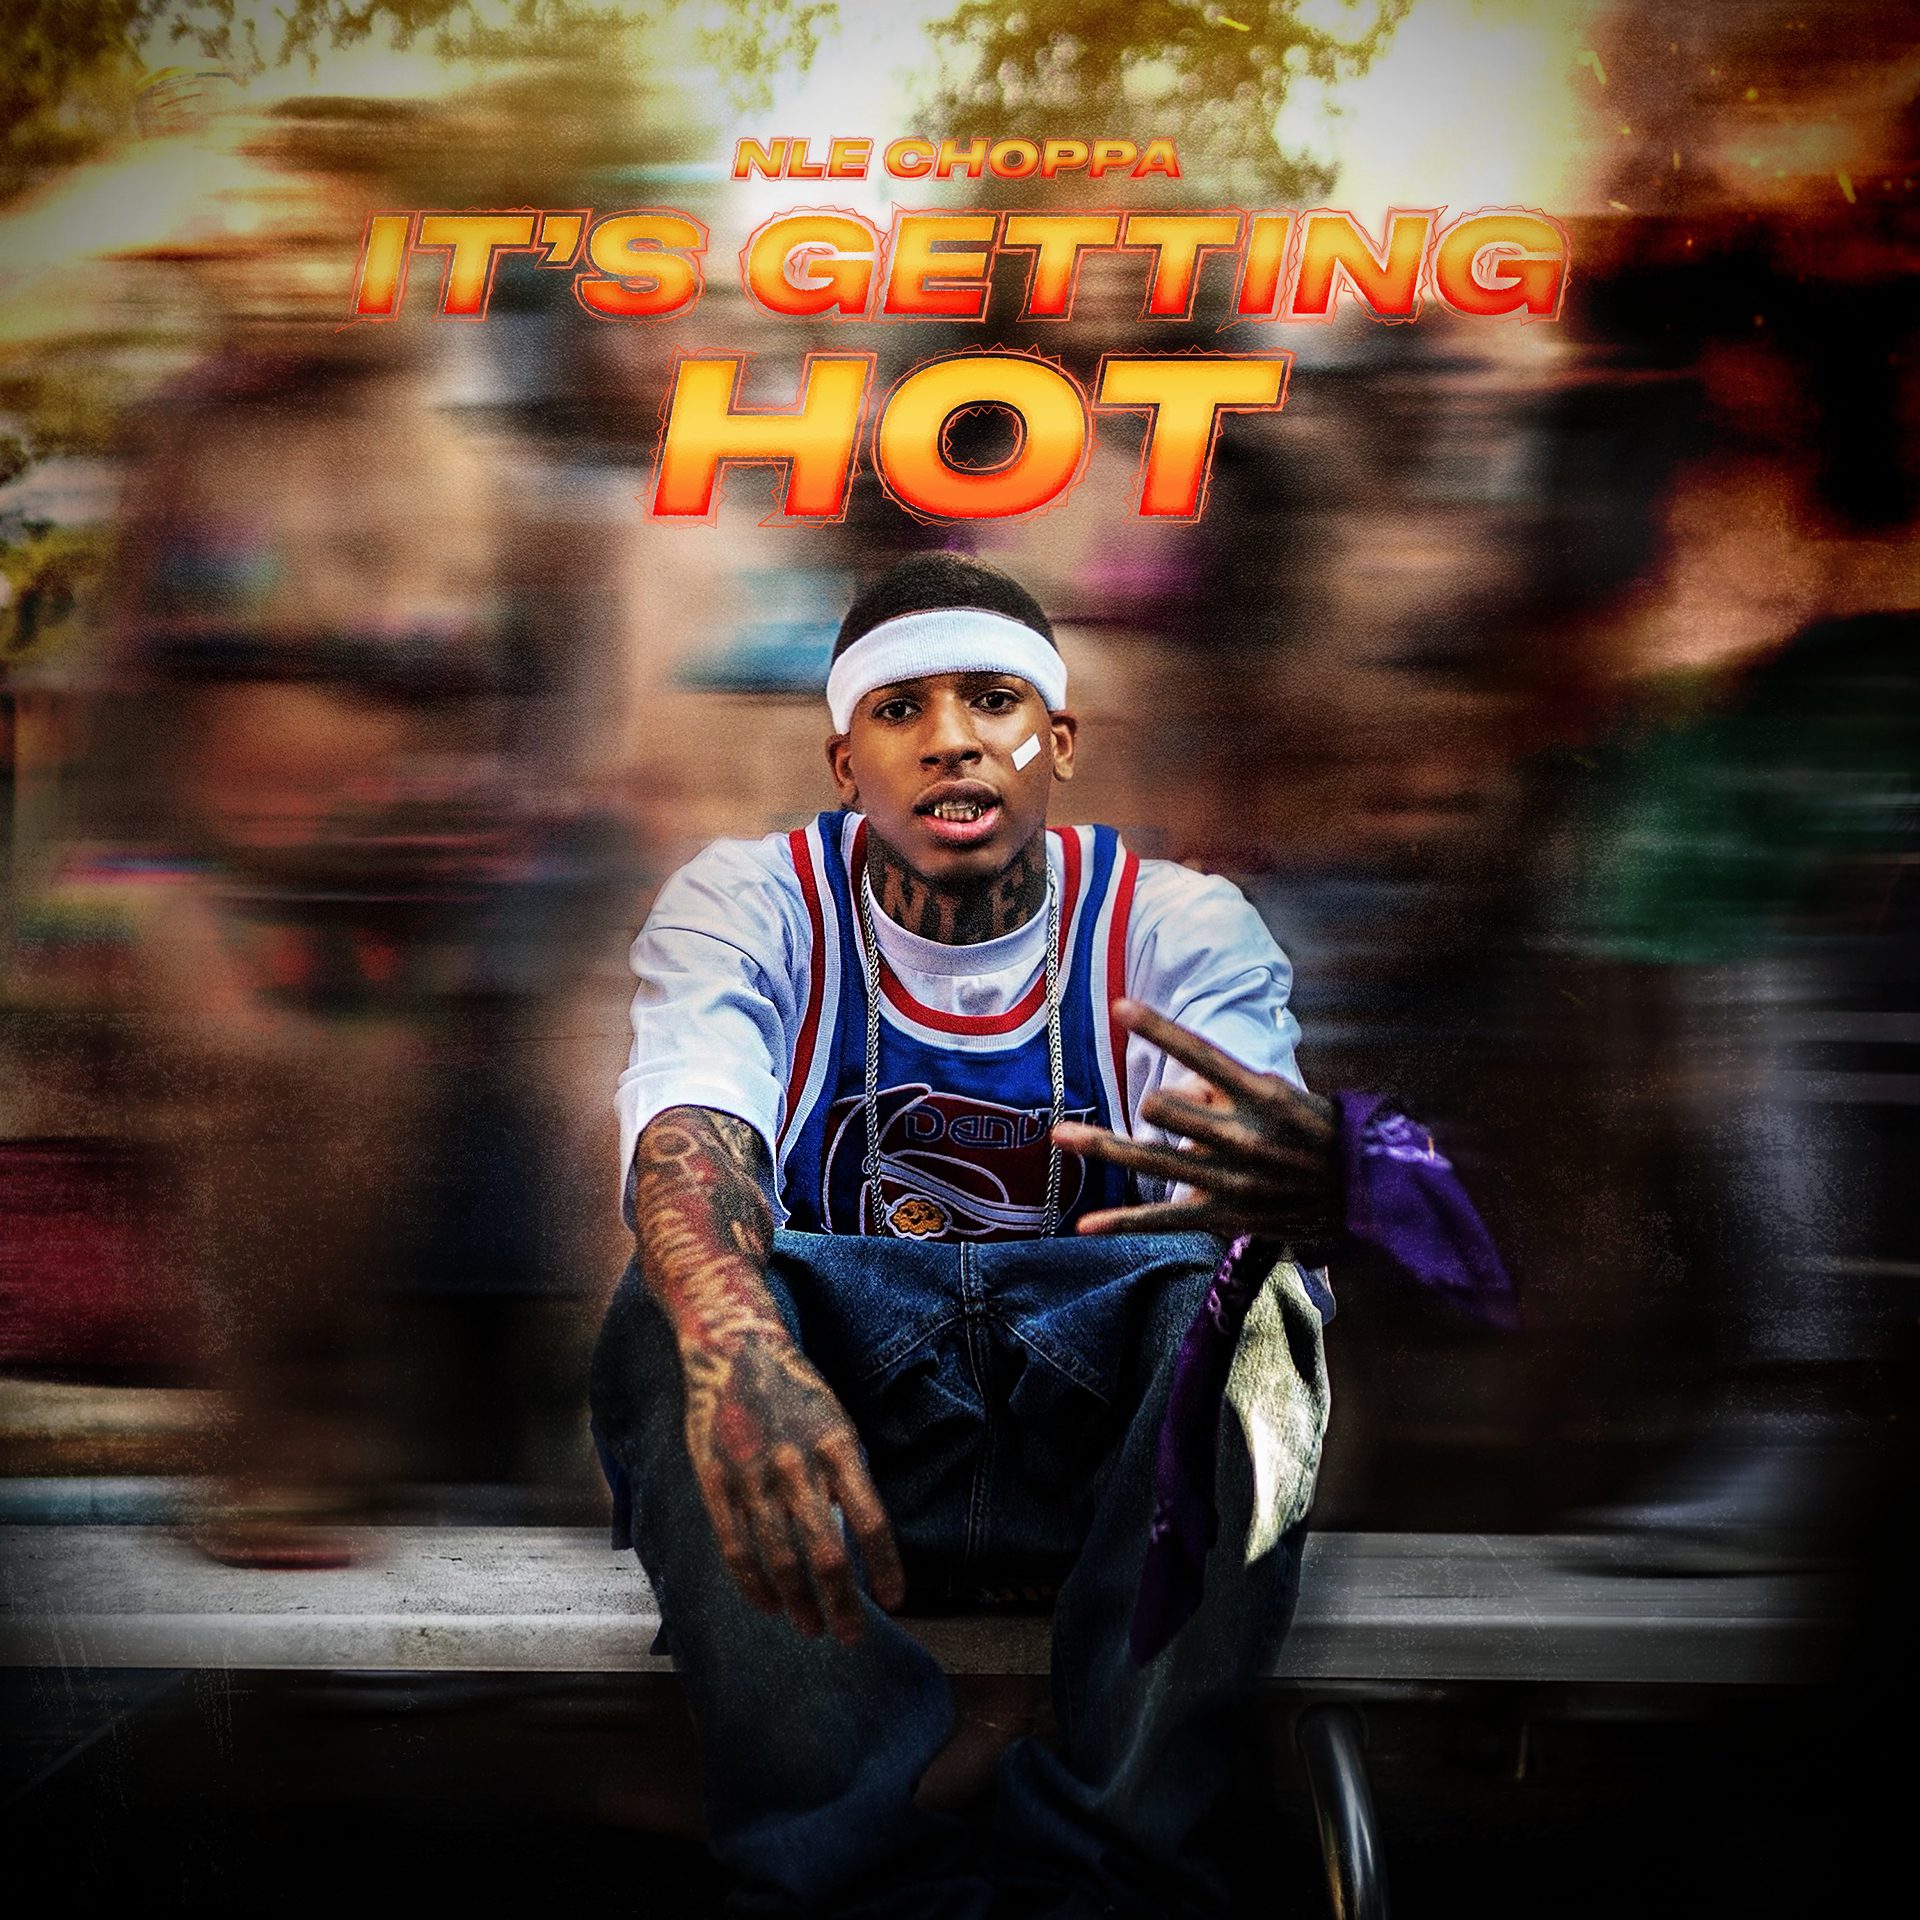 NLE Choppa releases Nelly hot in herre via 360 MAGAZINE.